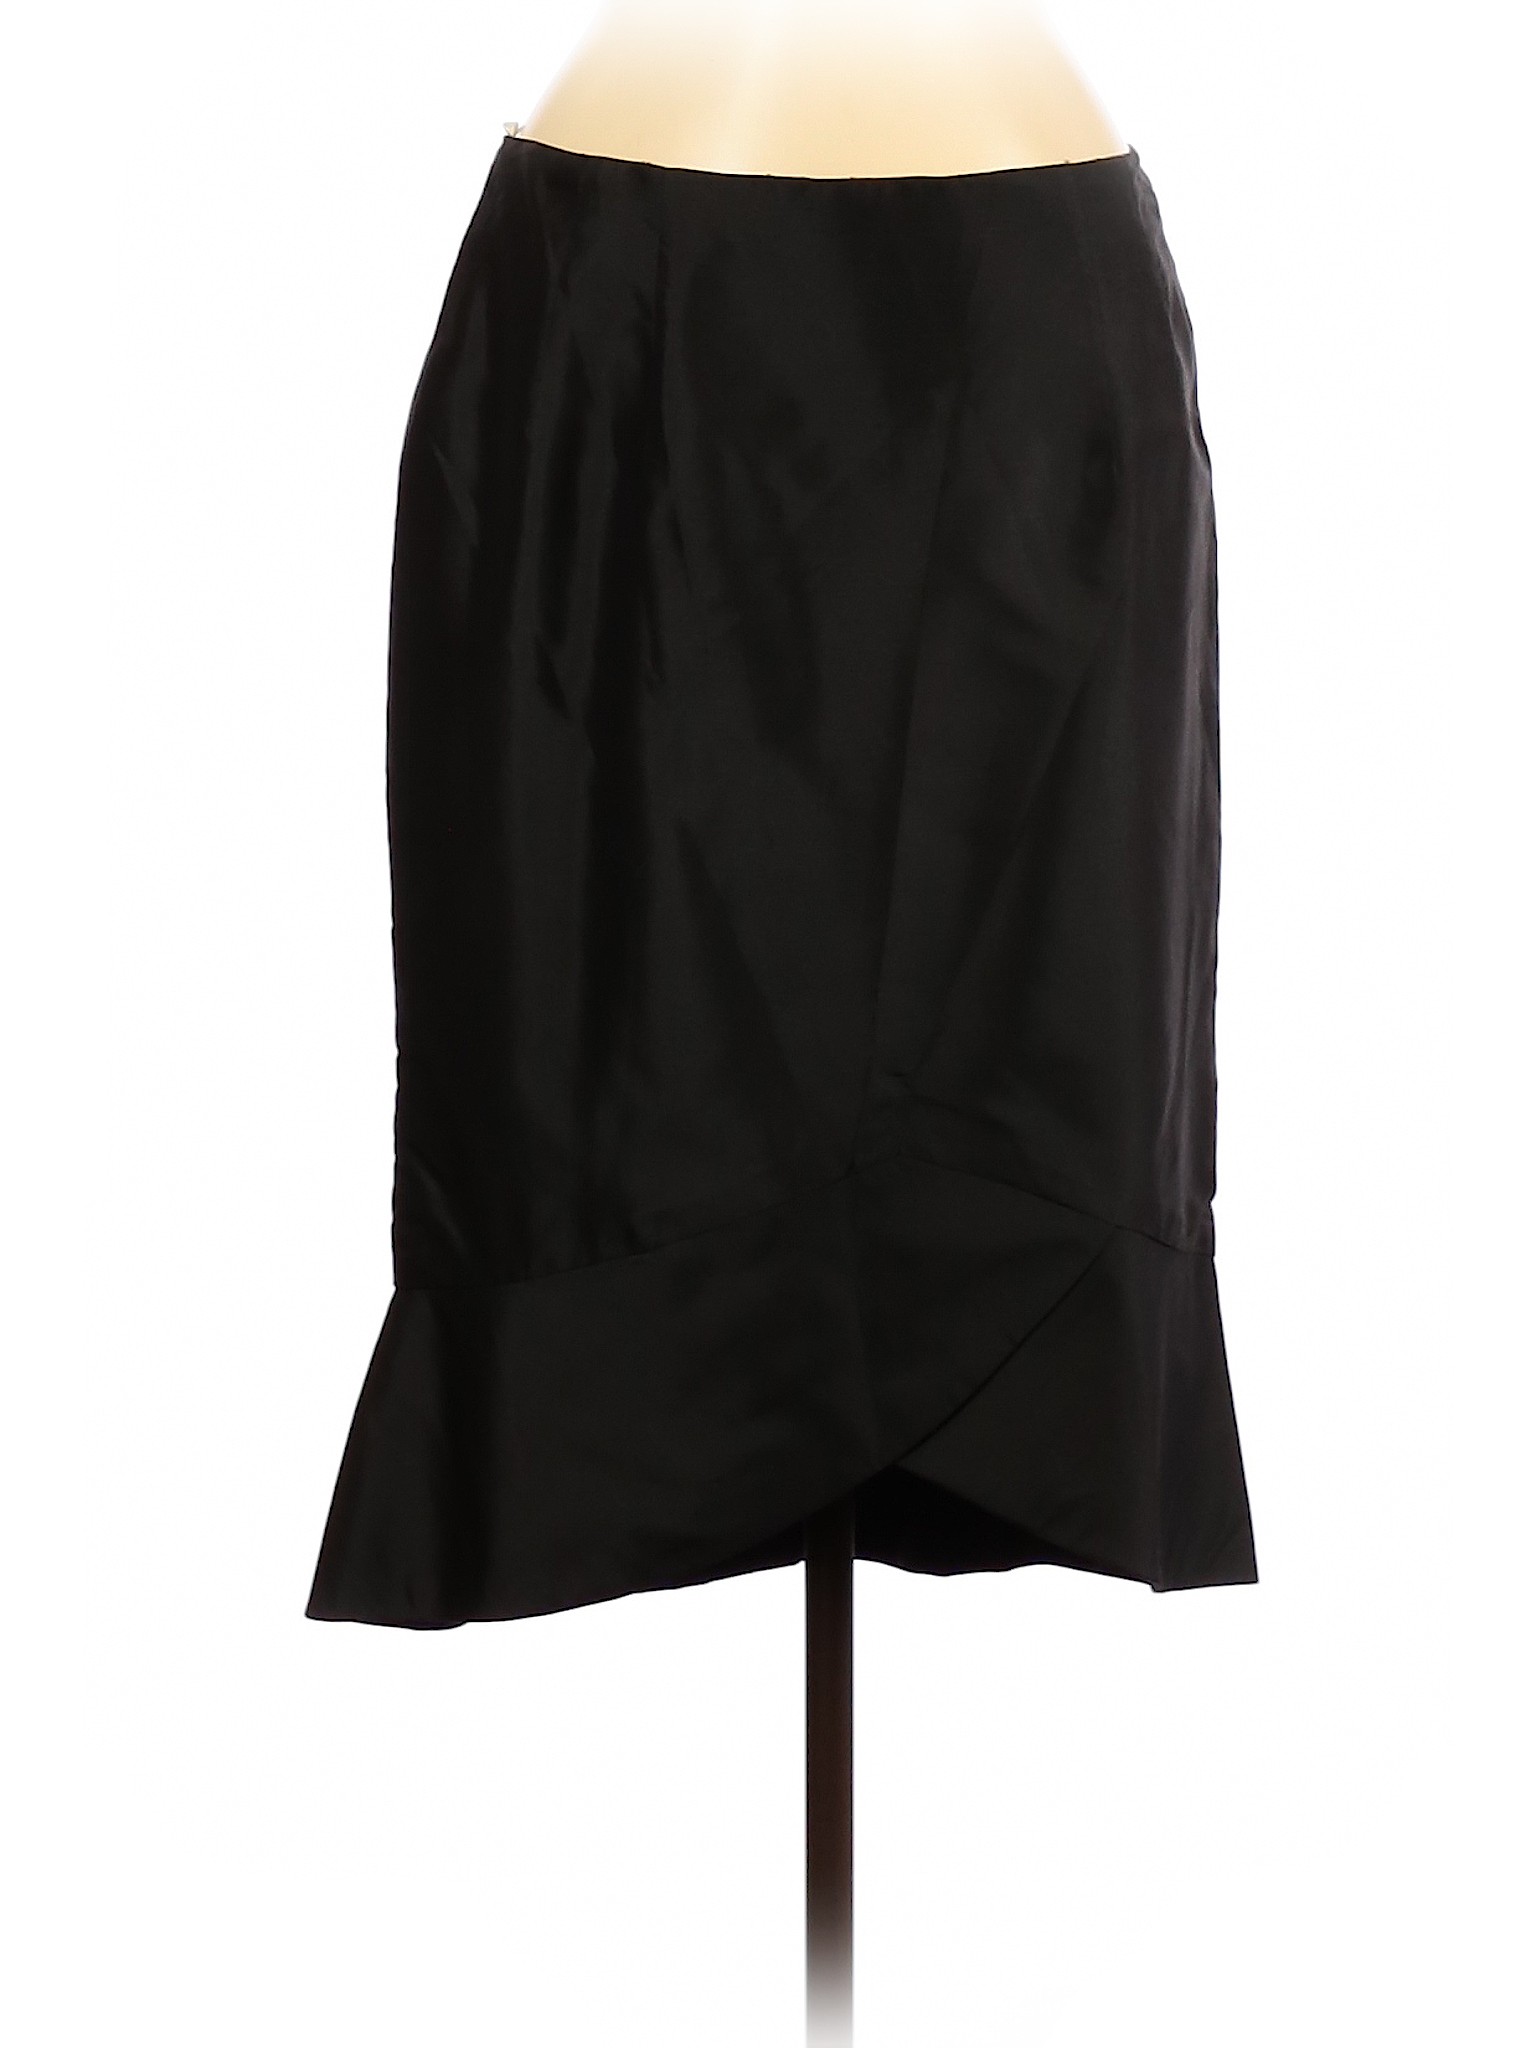 Marisa Baratelli 100% Silk Solid Black Silk Skirt Size 8 - 38% off ...